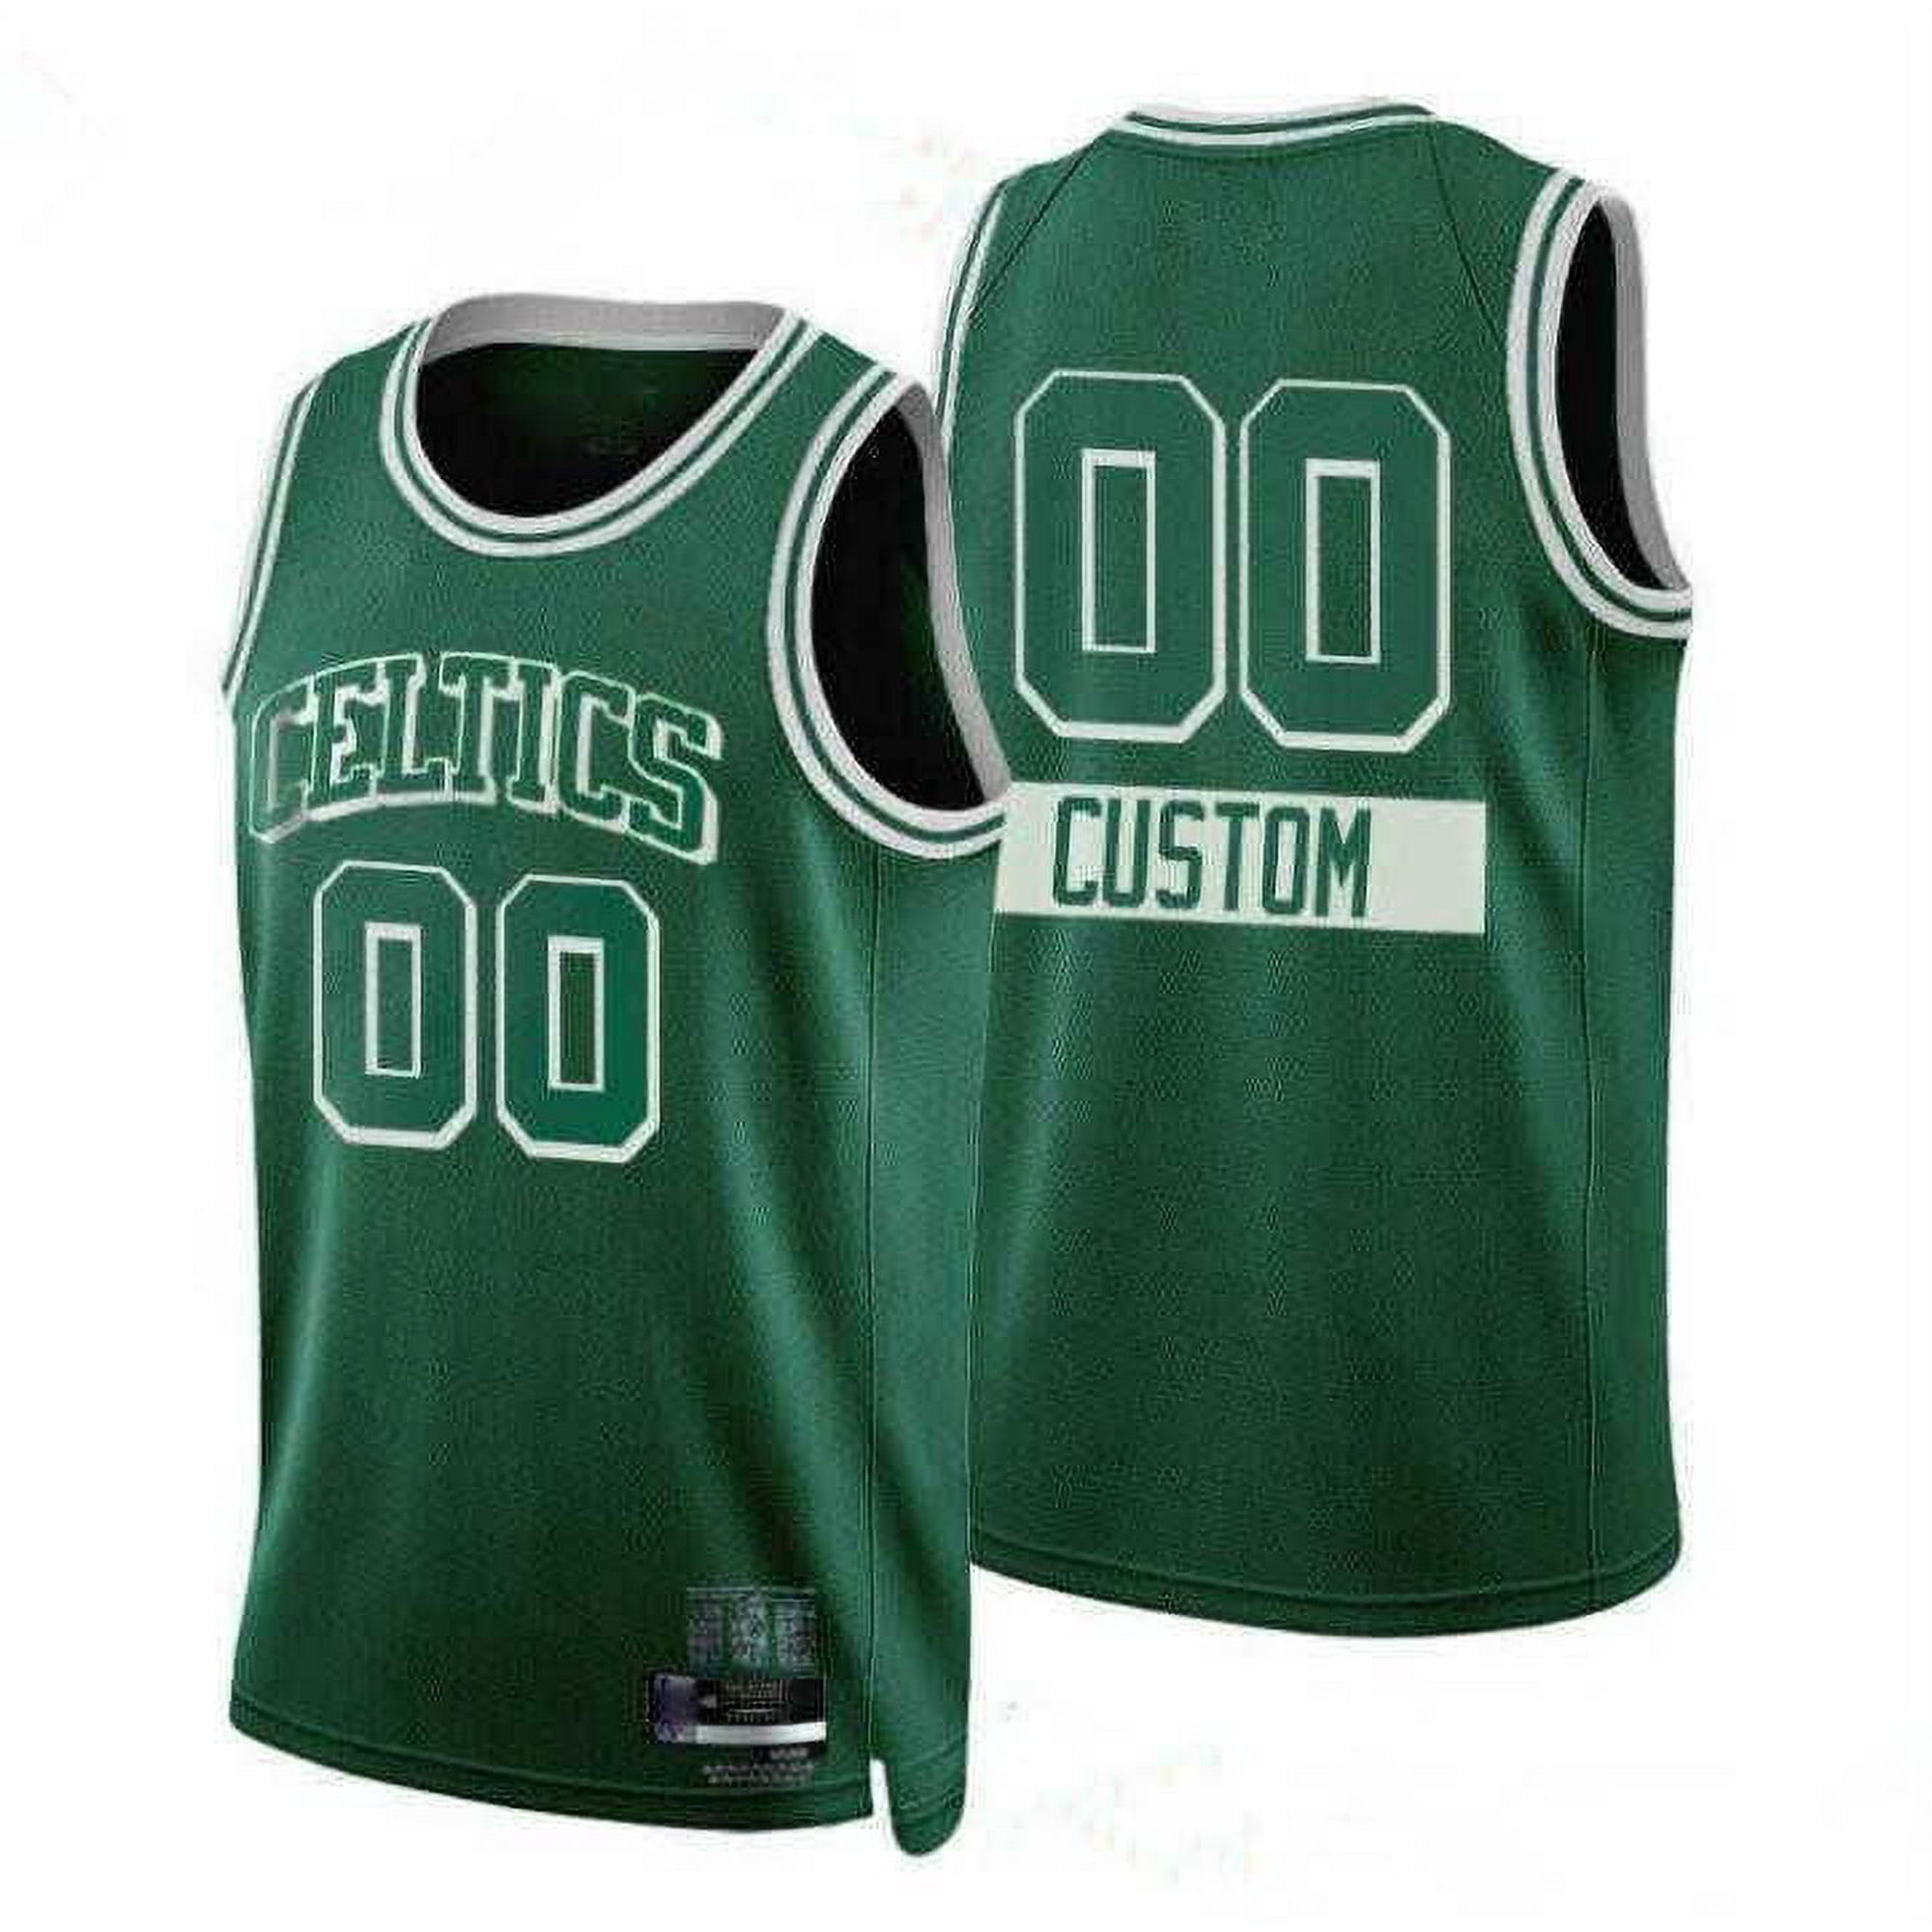 celtics basketball merchandise